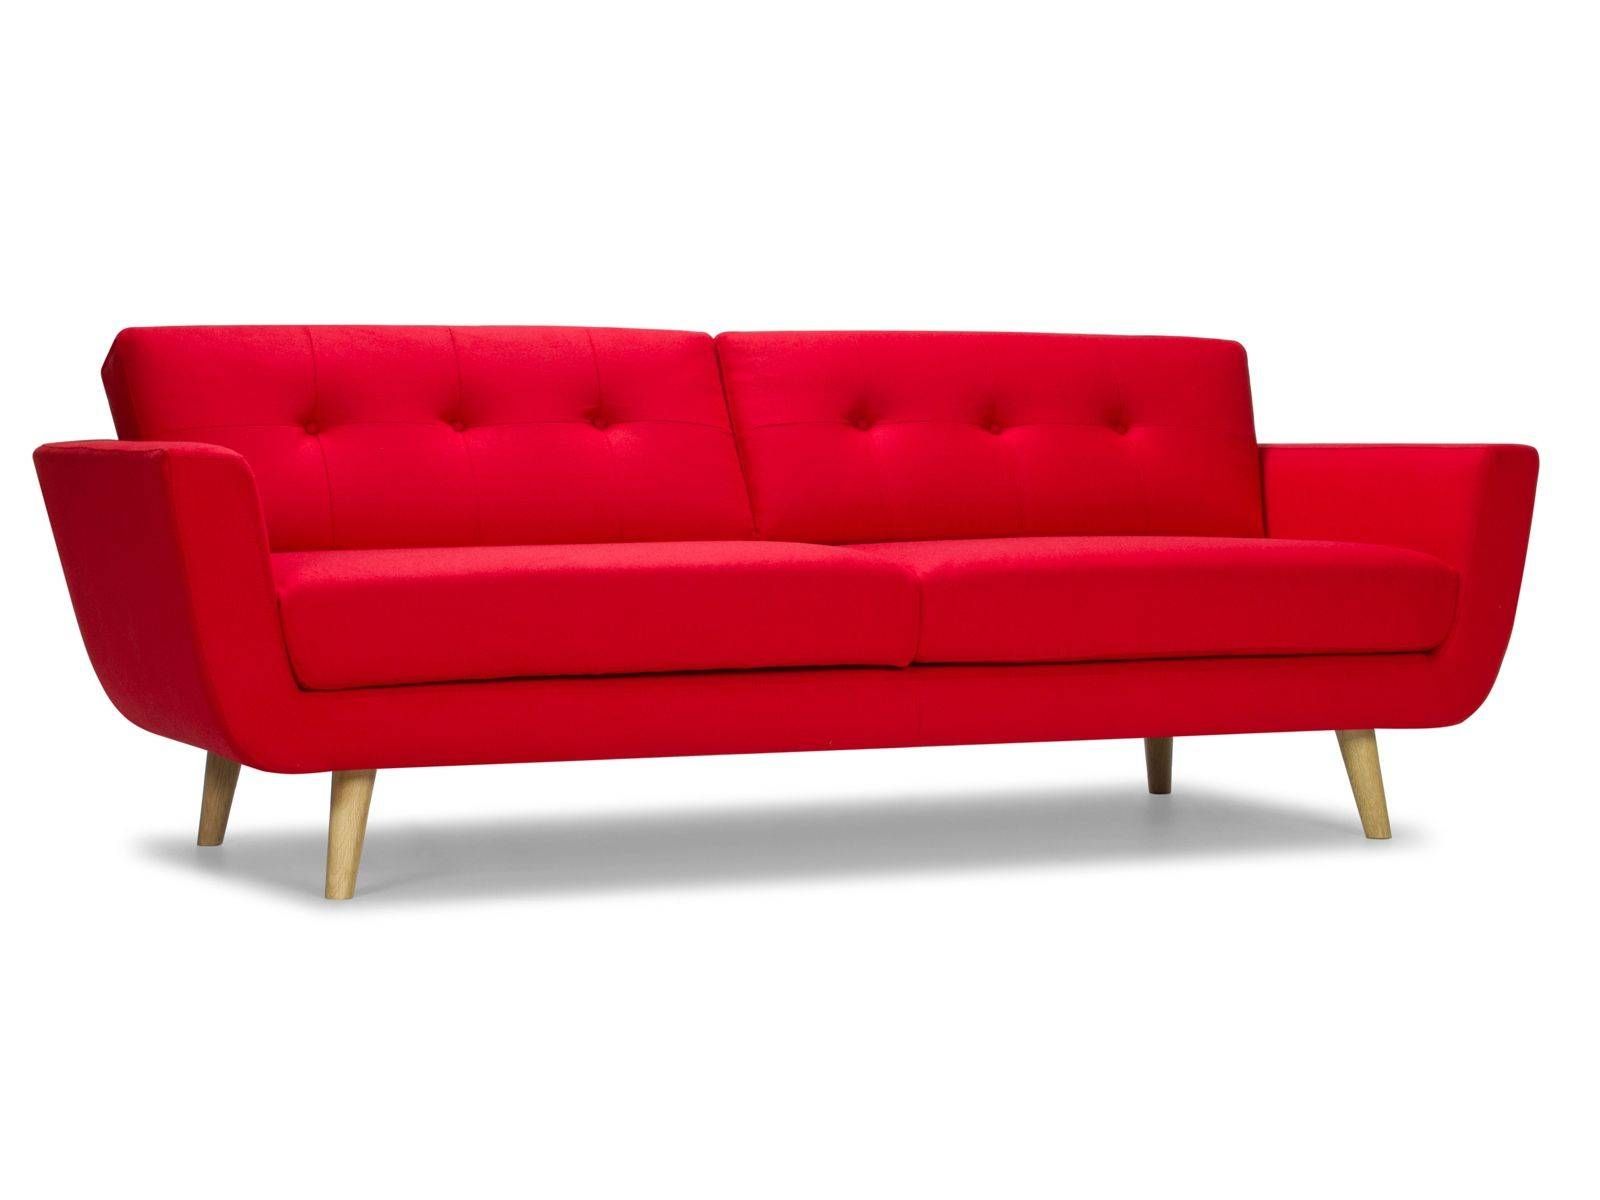 Belfast 3 Seater Retro Sofa | Real Grown Up Furniture | Pinterest Pertaining To Cheap Retro Sofas (Photo 11 of 30)